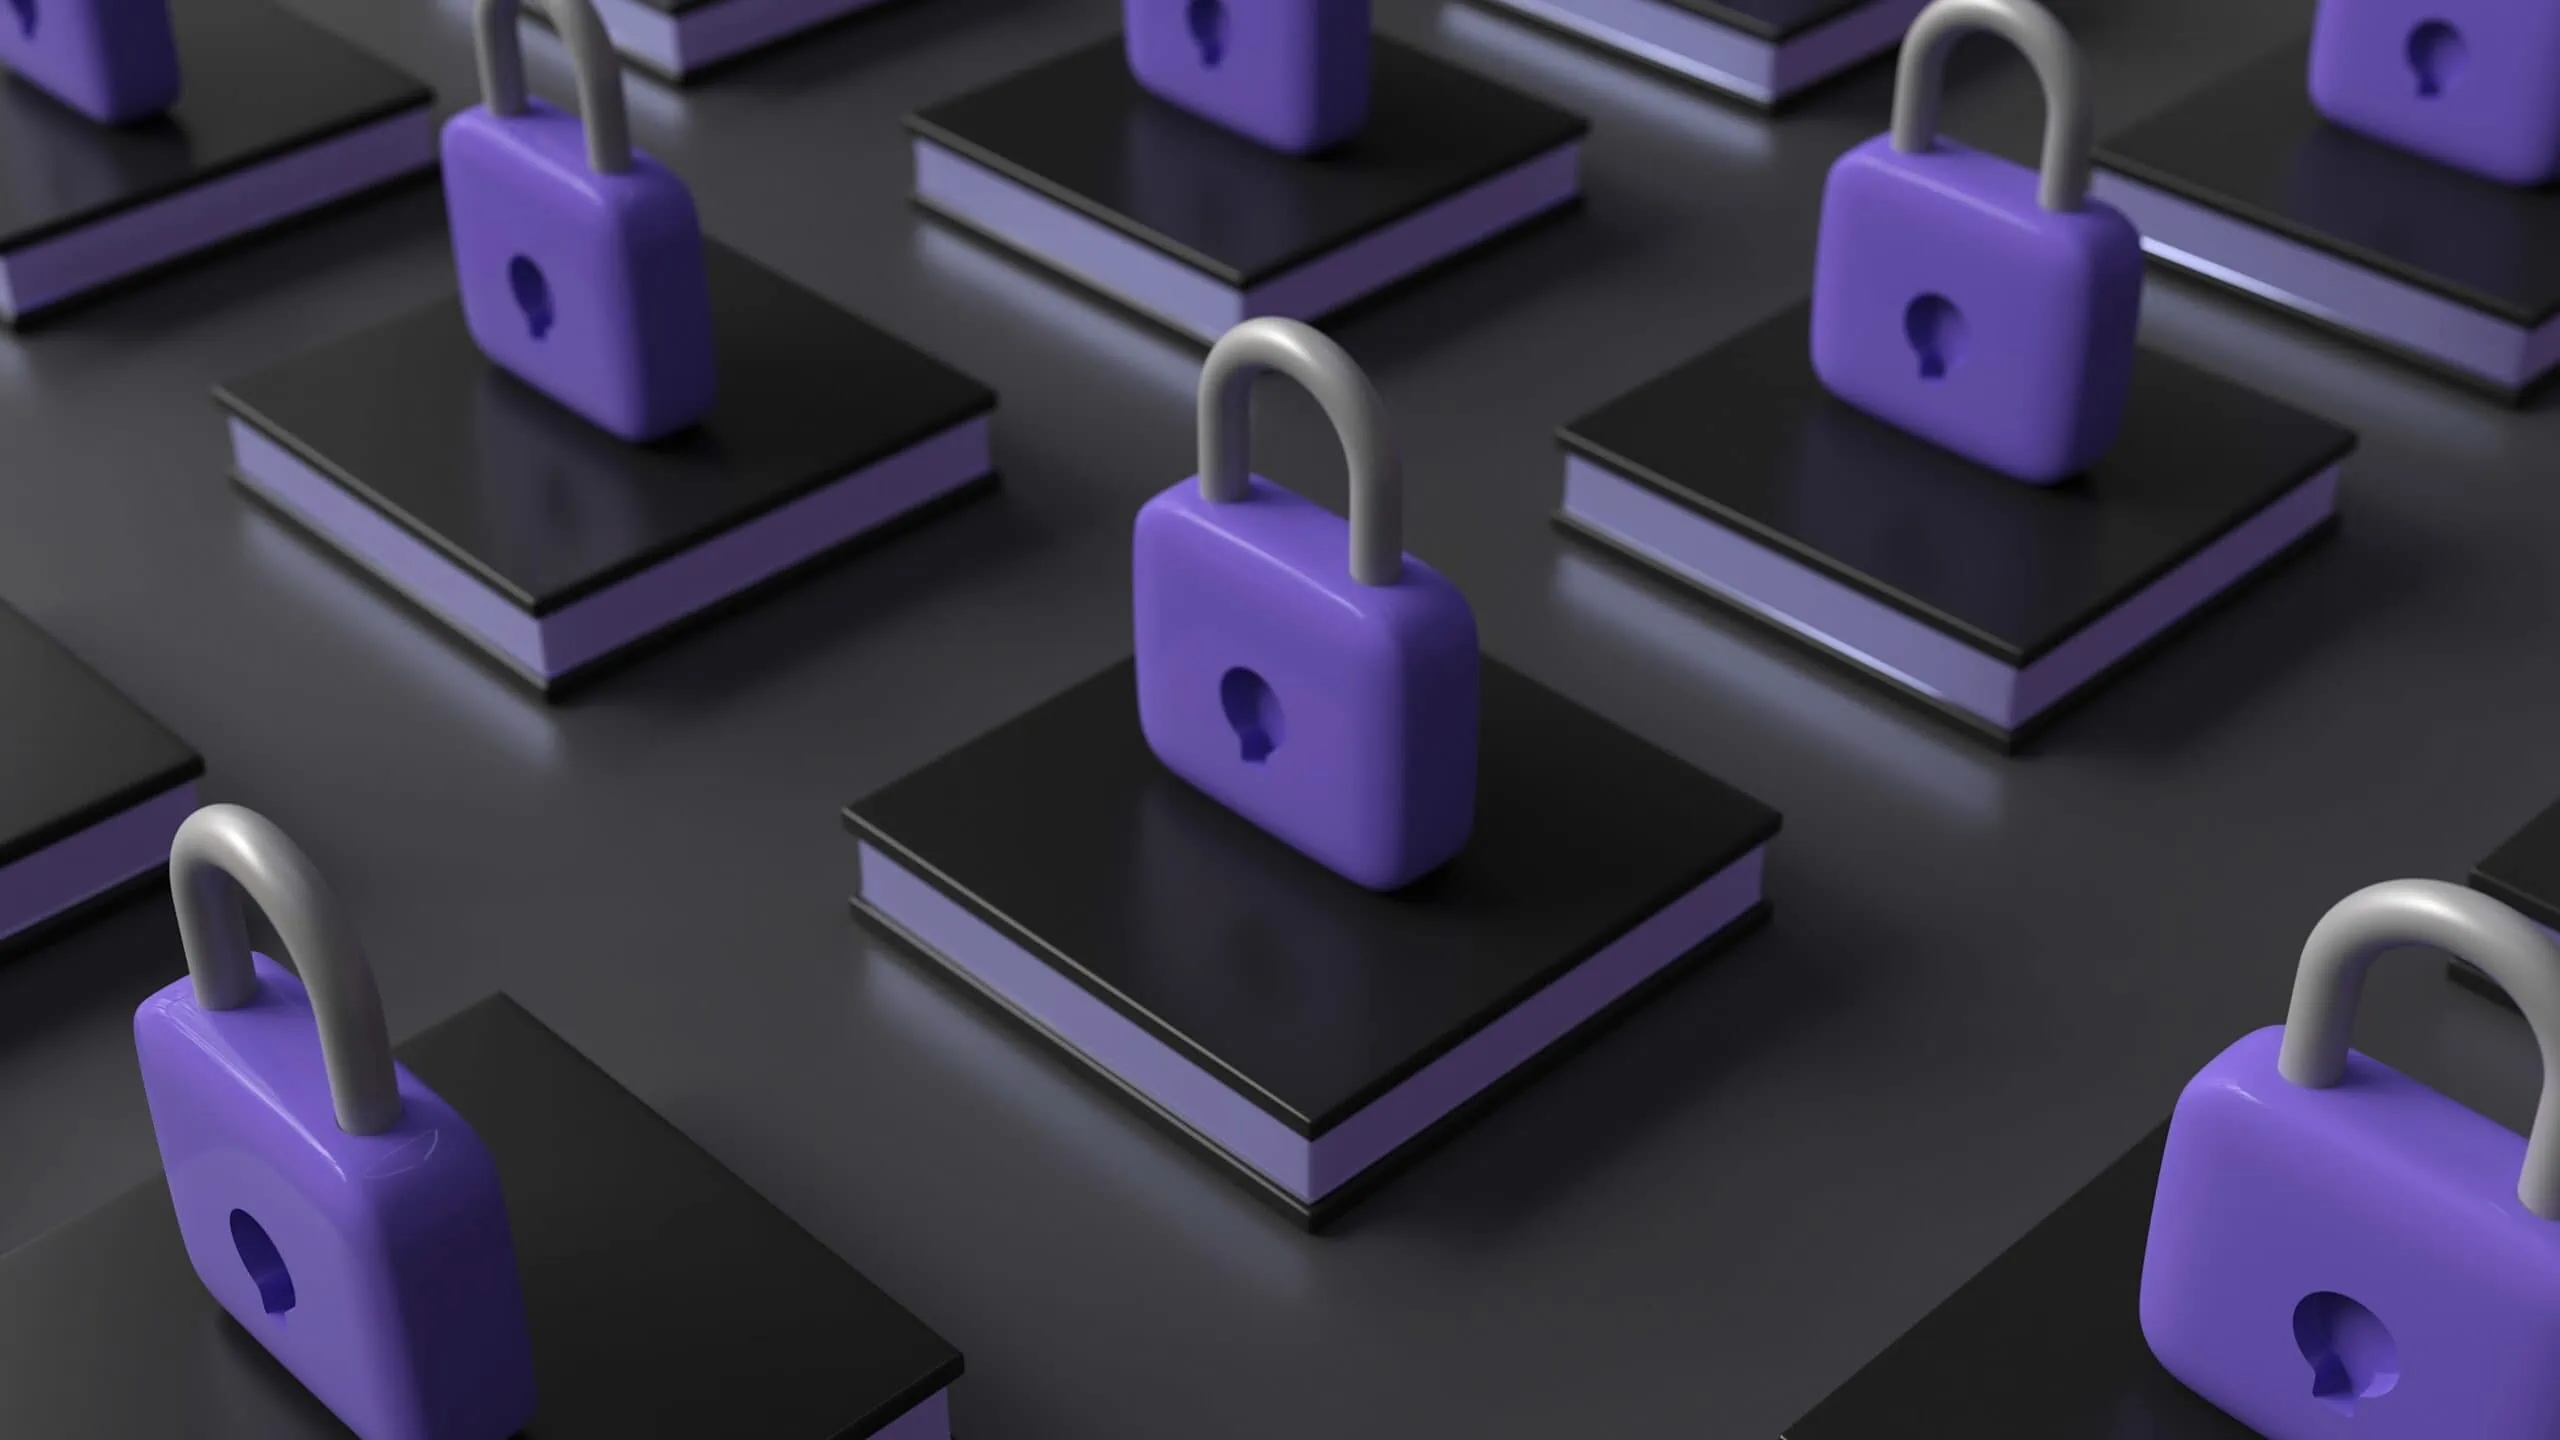 secured data with purple locks on platforms